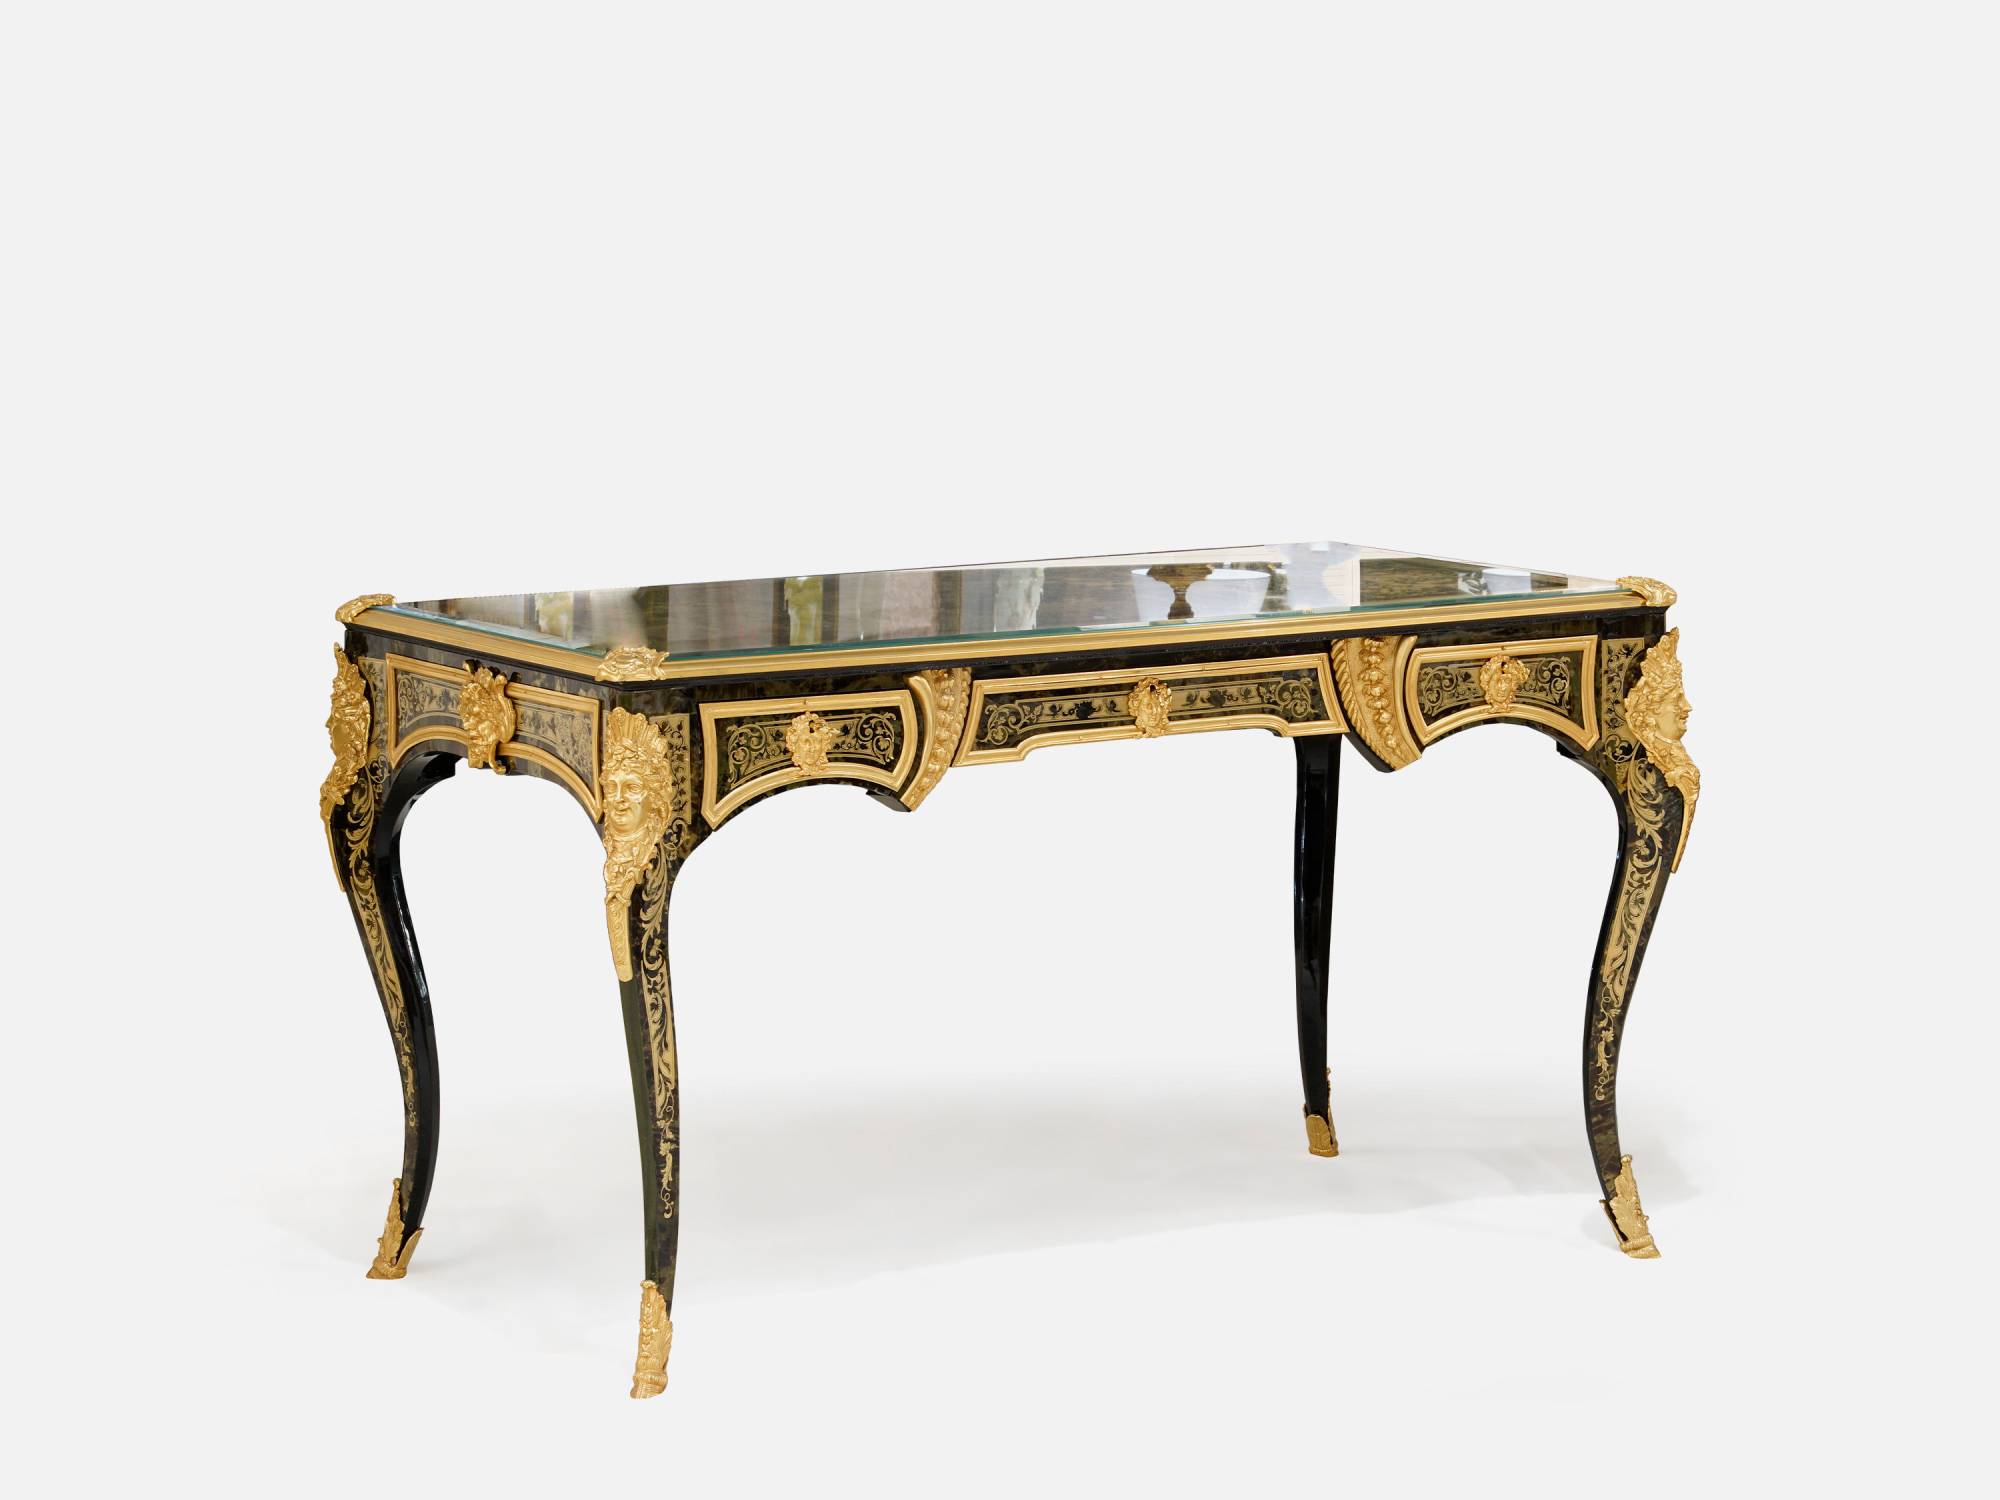 ART. 2196 – C.G. Capelletti Italian Luxury Classic Desks and writing desks. Made in Italy classic interior design